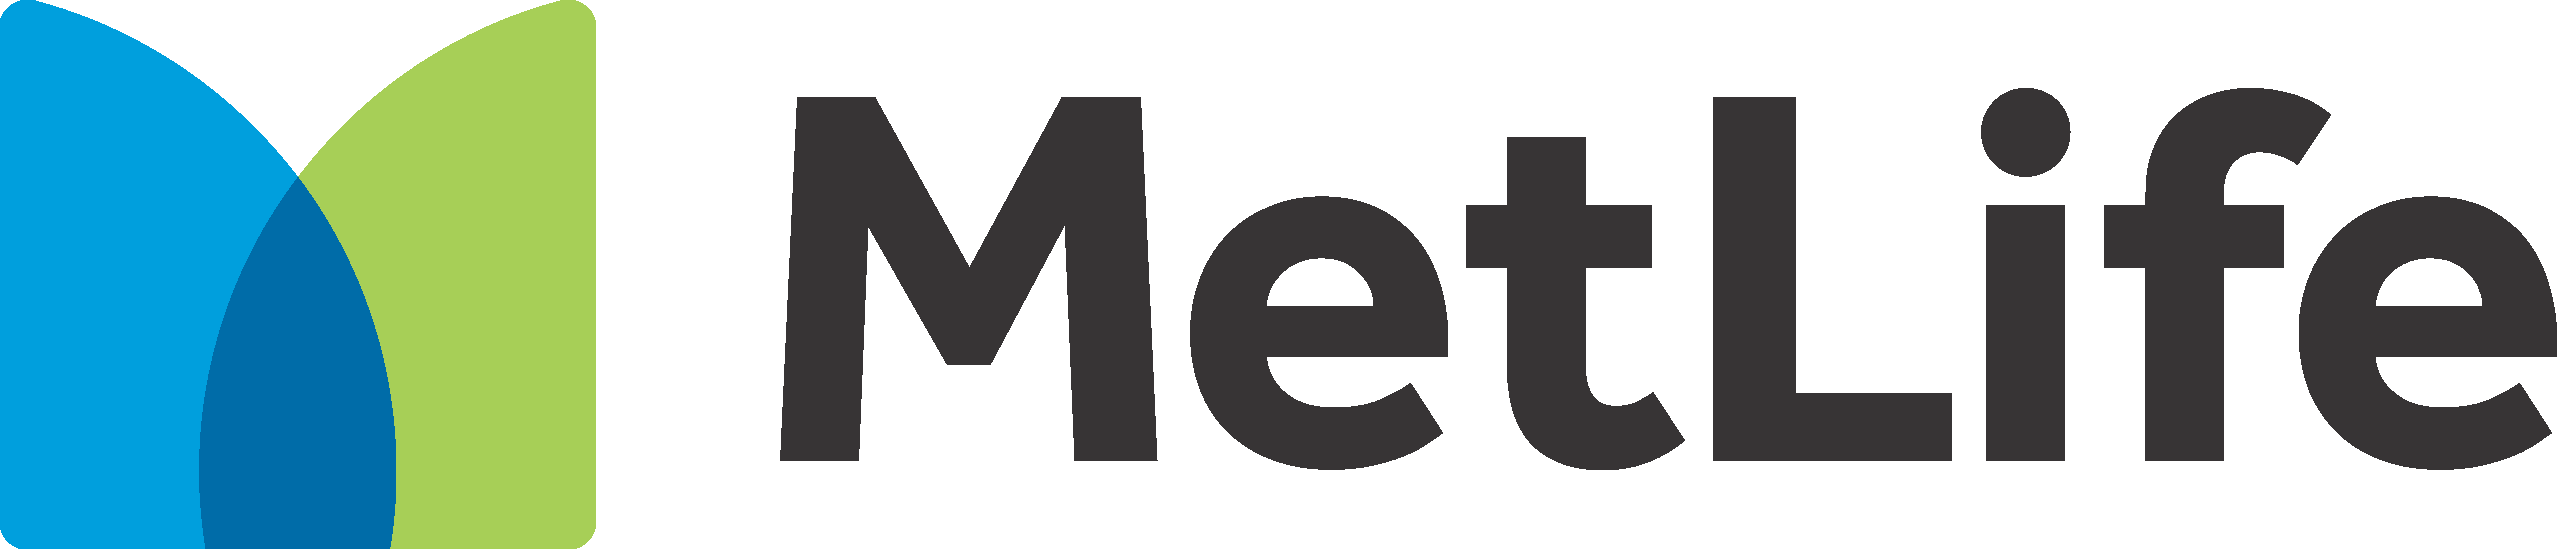 Metlife Logo png